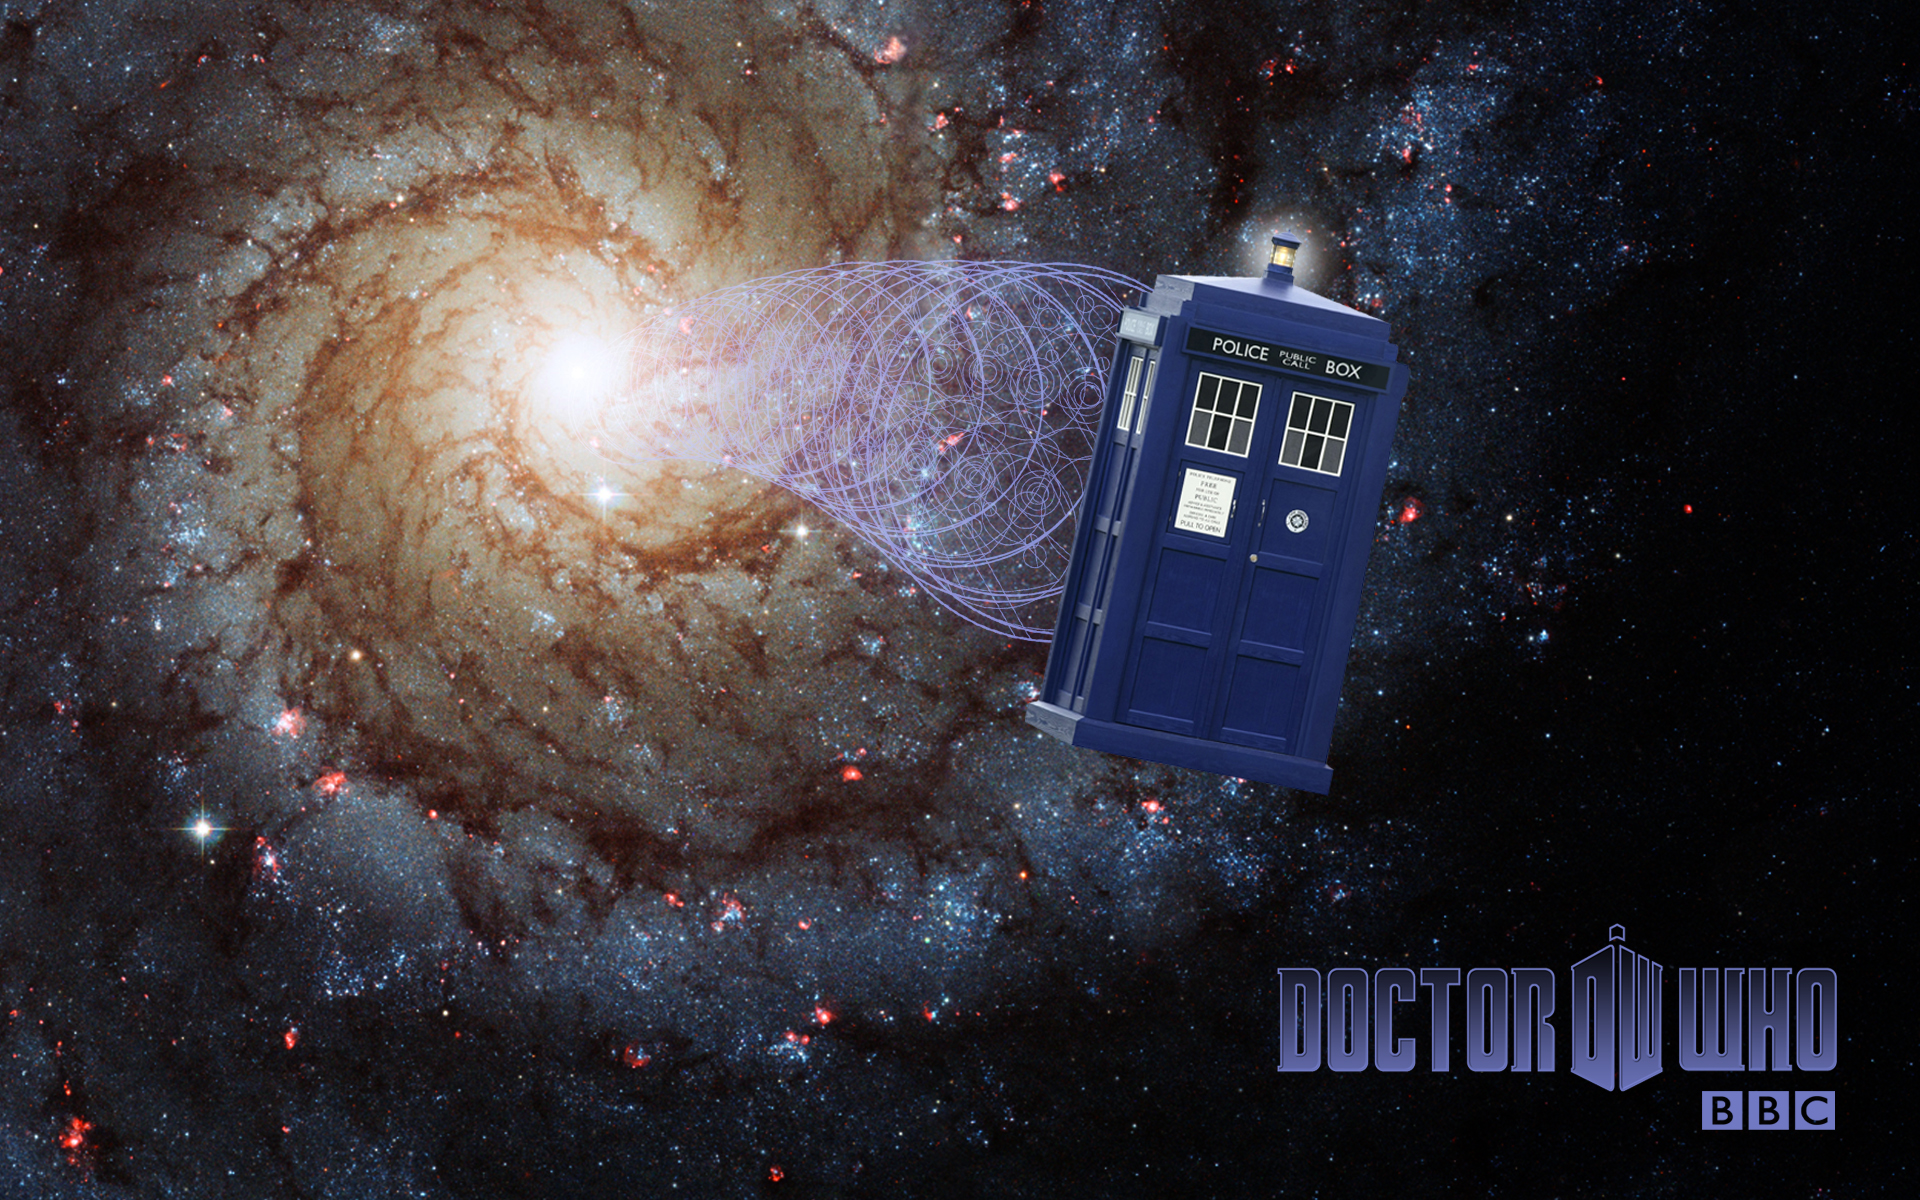 Wallpapers Trending Tumblr Doctor Who 1920x1200 | #2207986 #trending